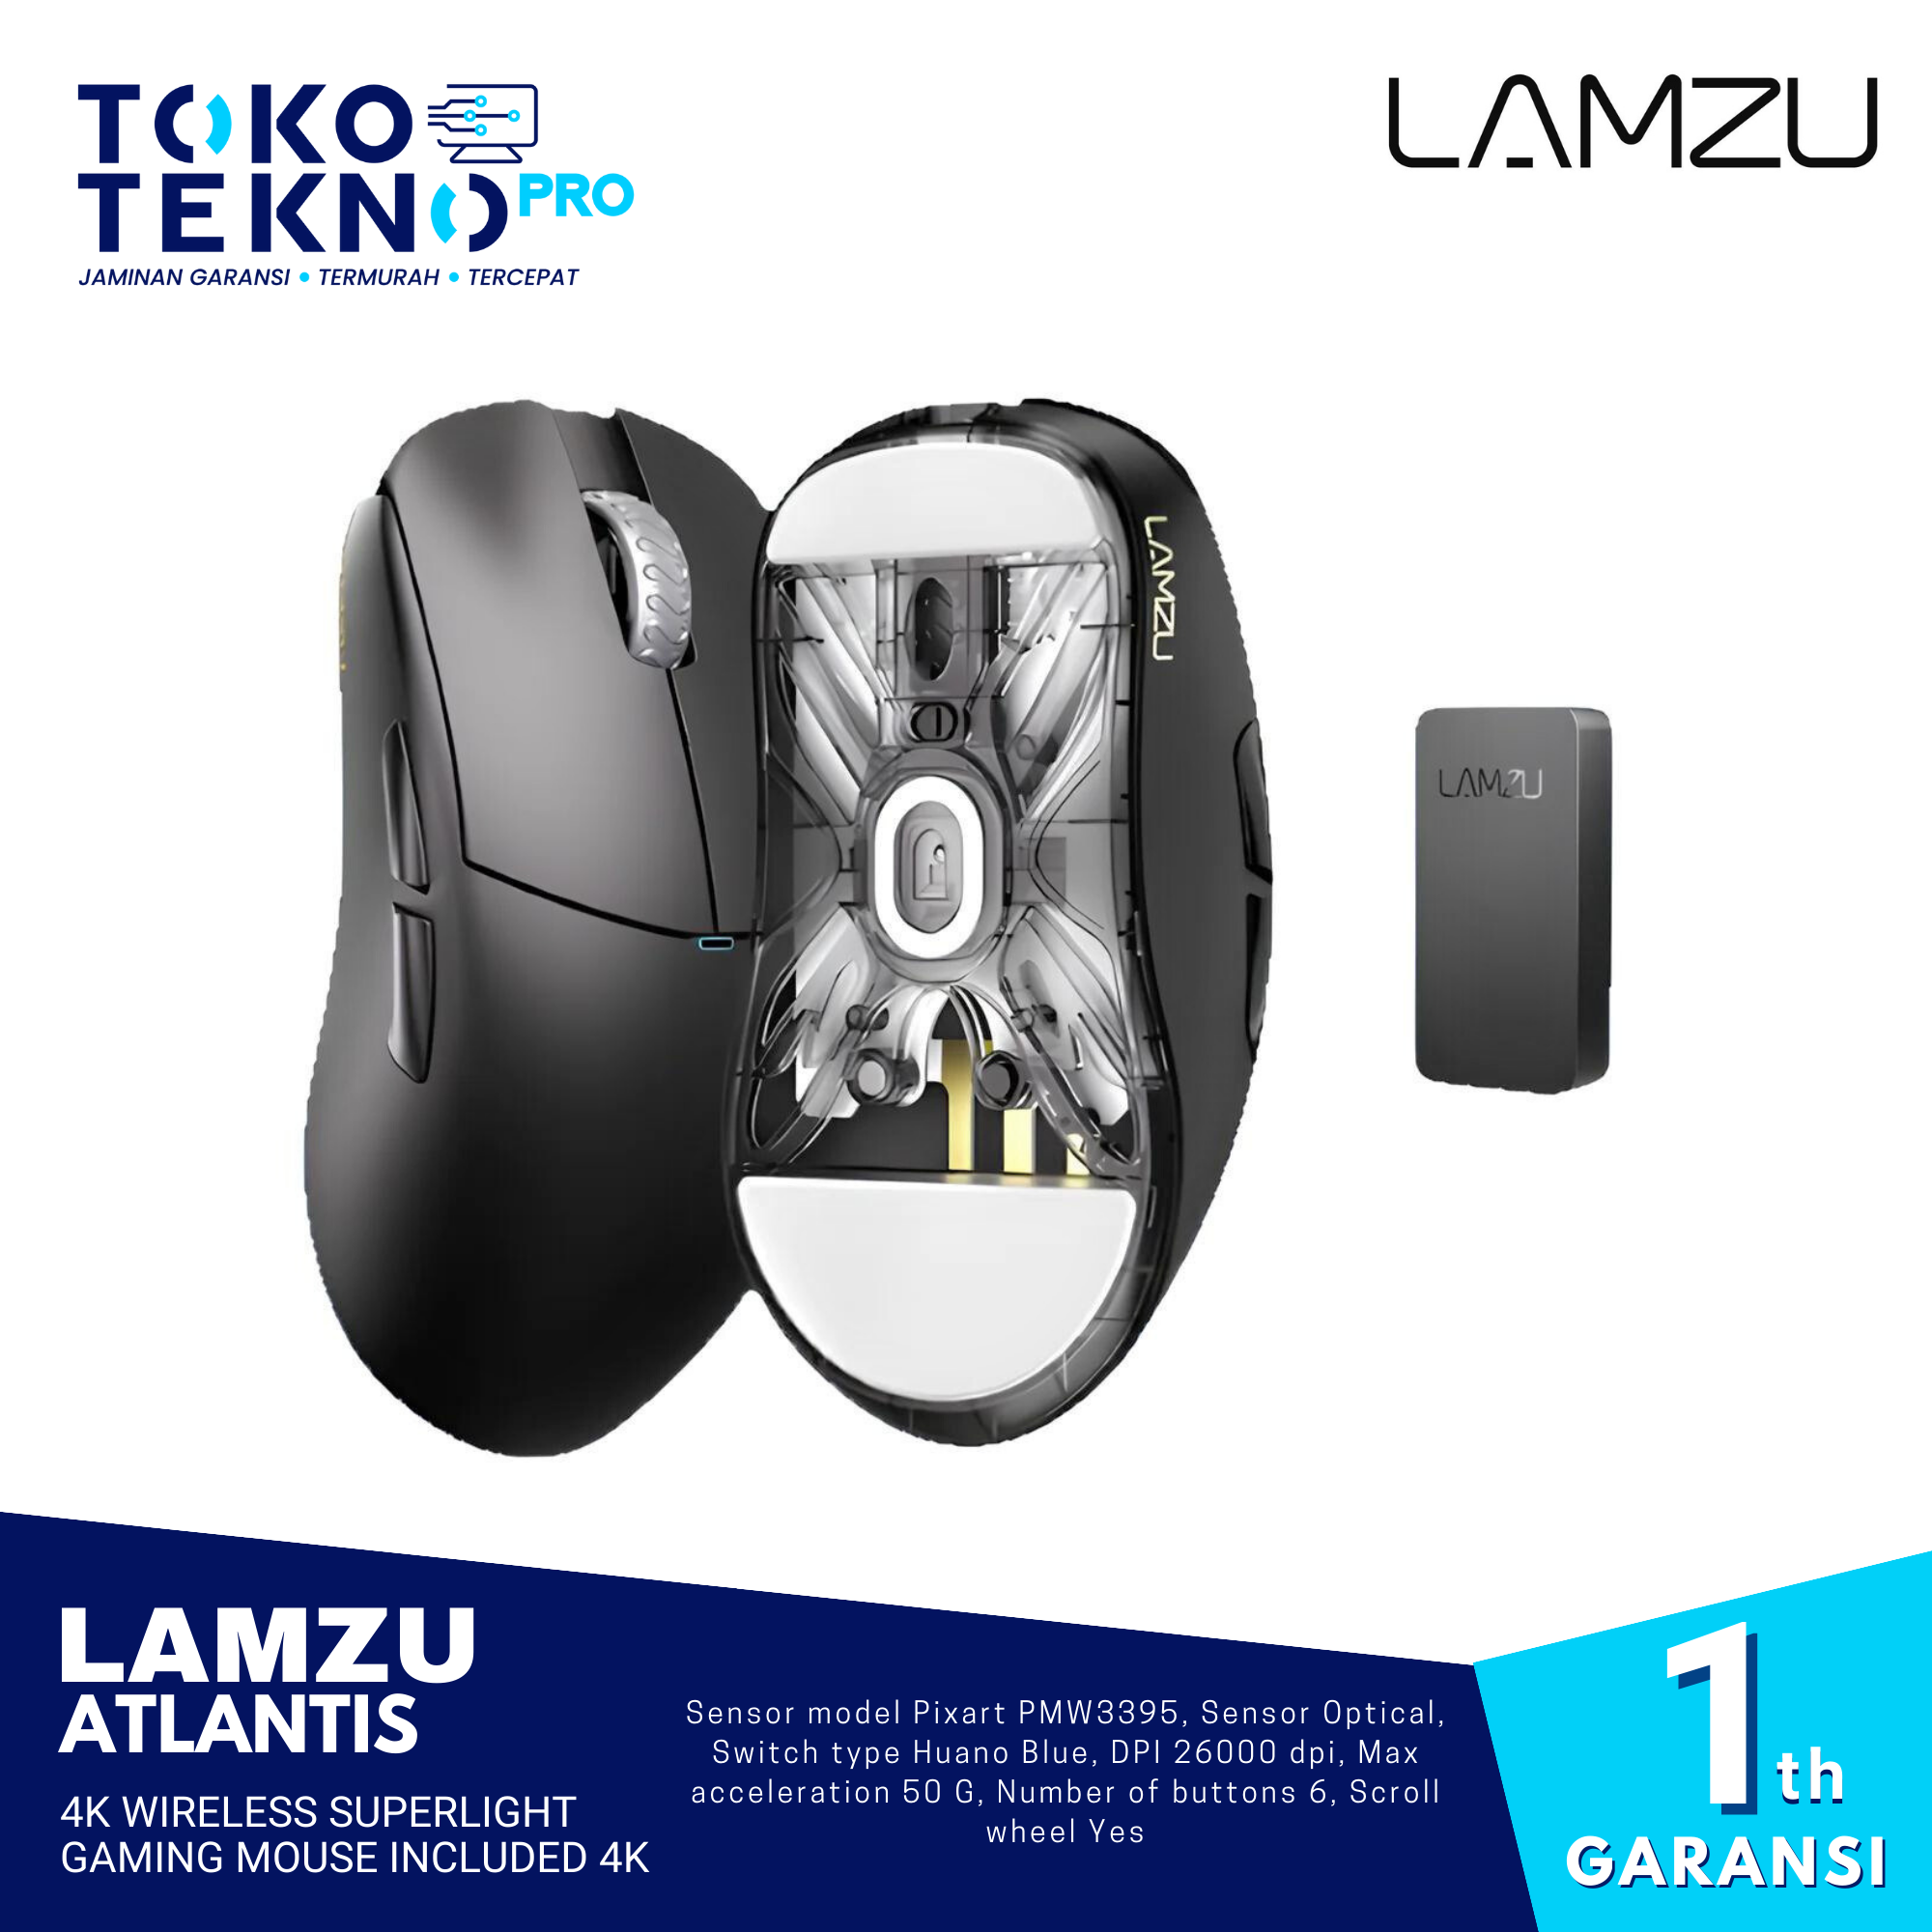 Lamzu Atlantis 4K Wireless Superlight Gaming Mouse Included 4K